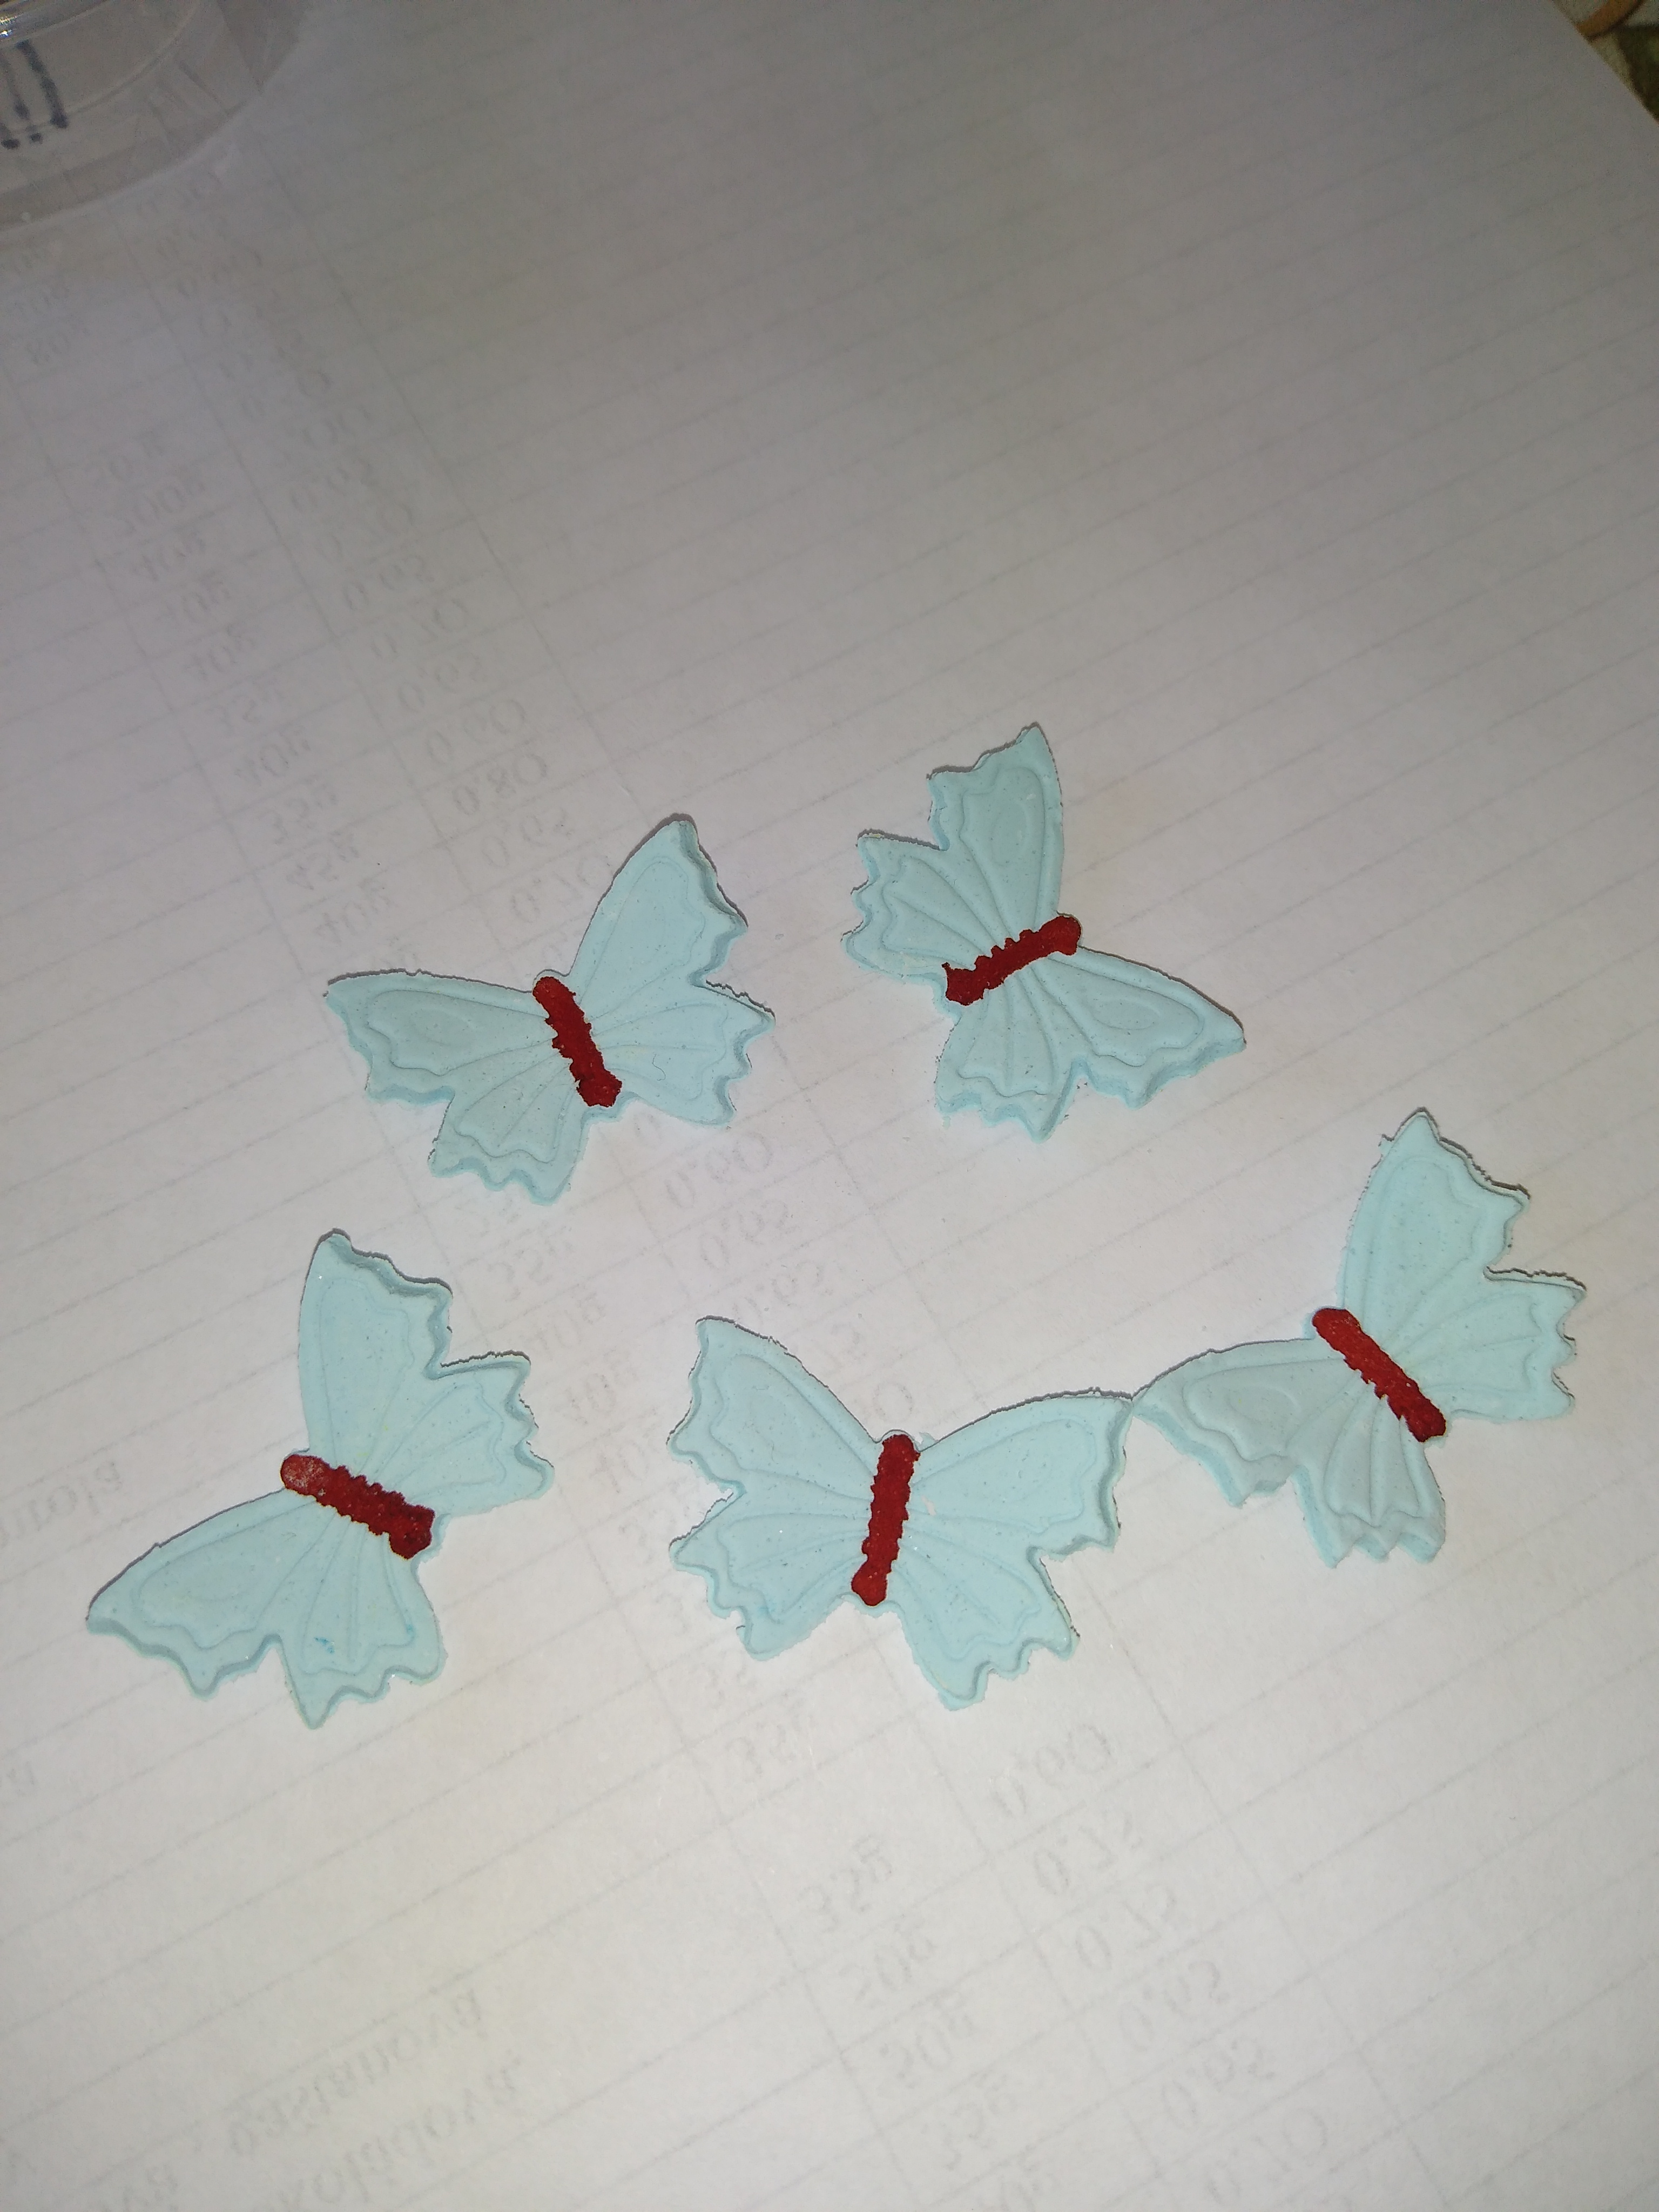 Motýľ malý modrý 3x2 cm , 5 ks/bal